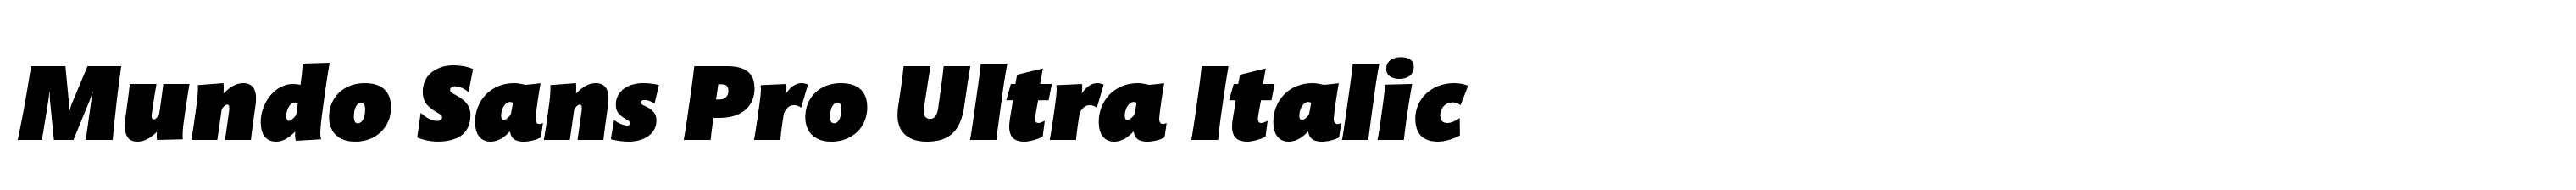 Mundo Sans Pro Ultra Italic